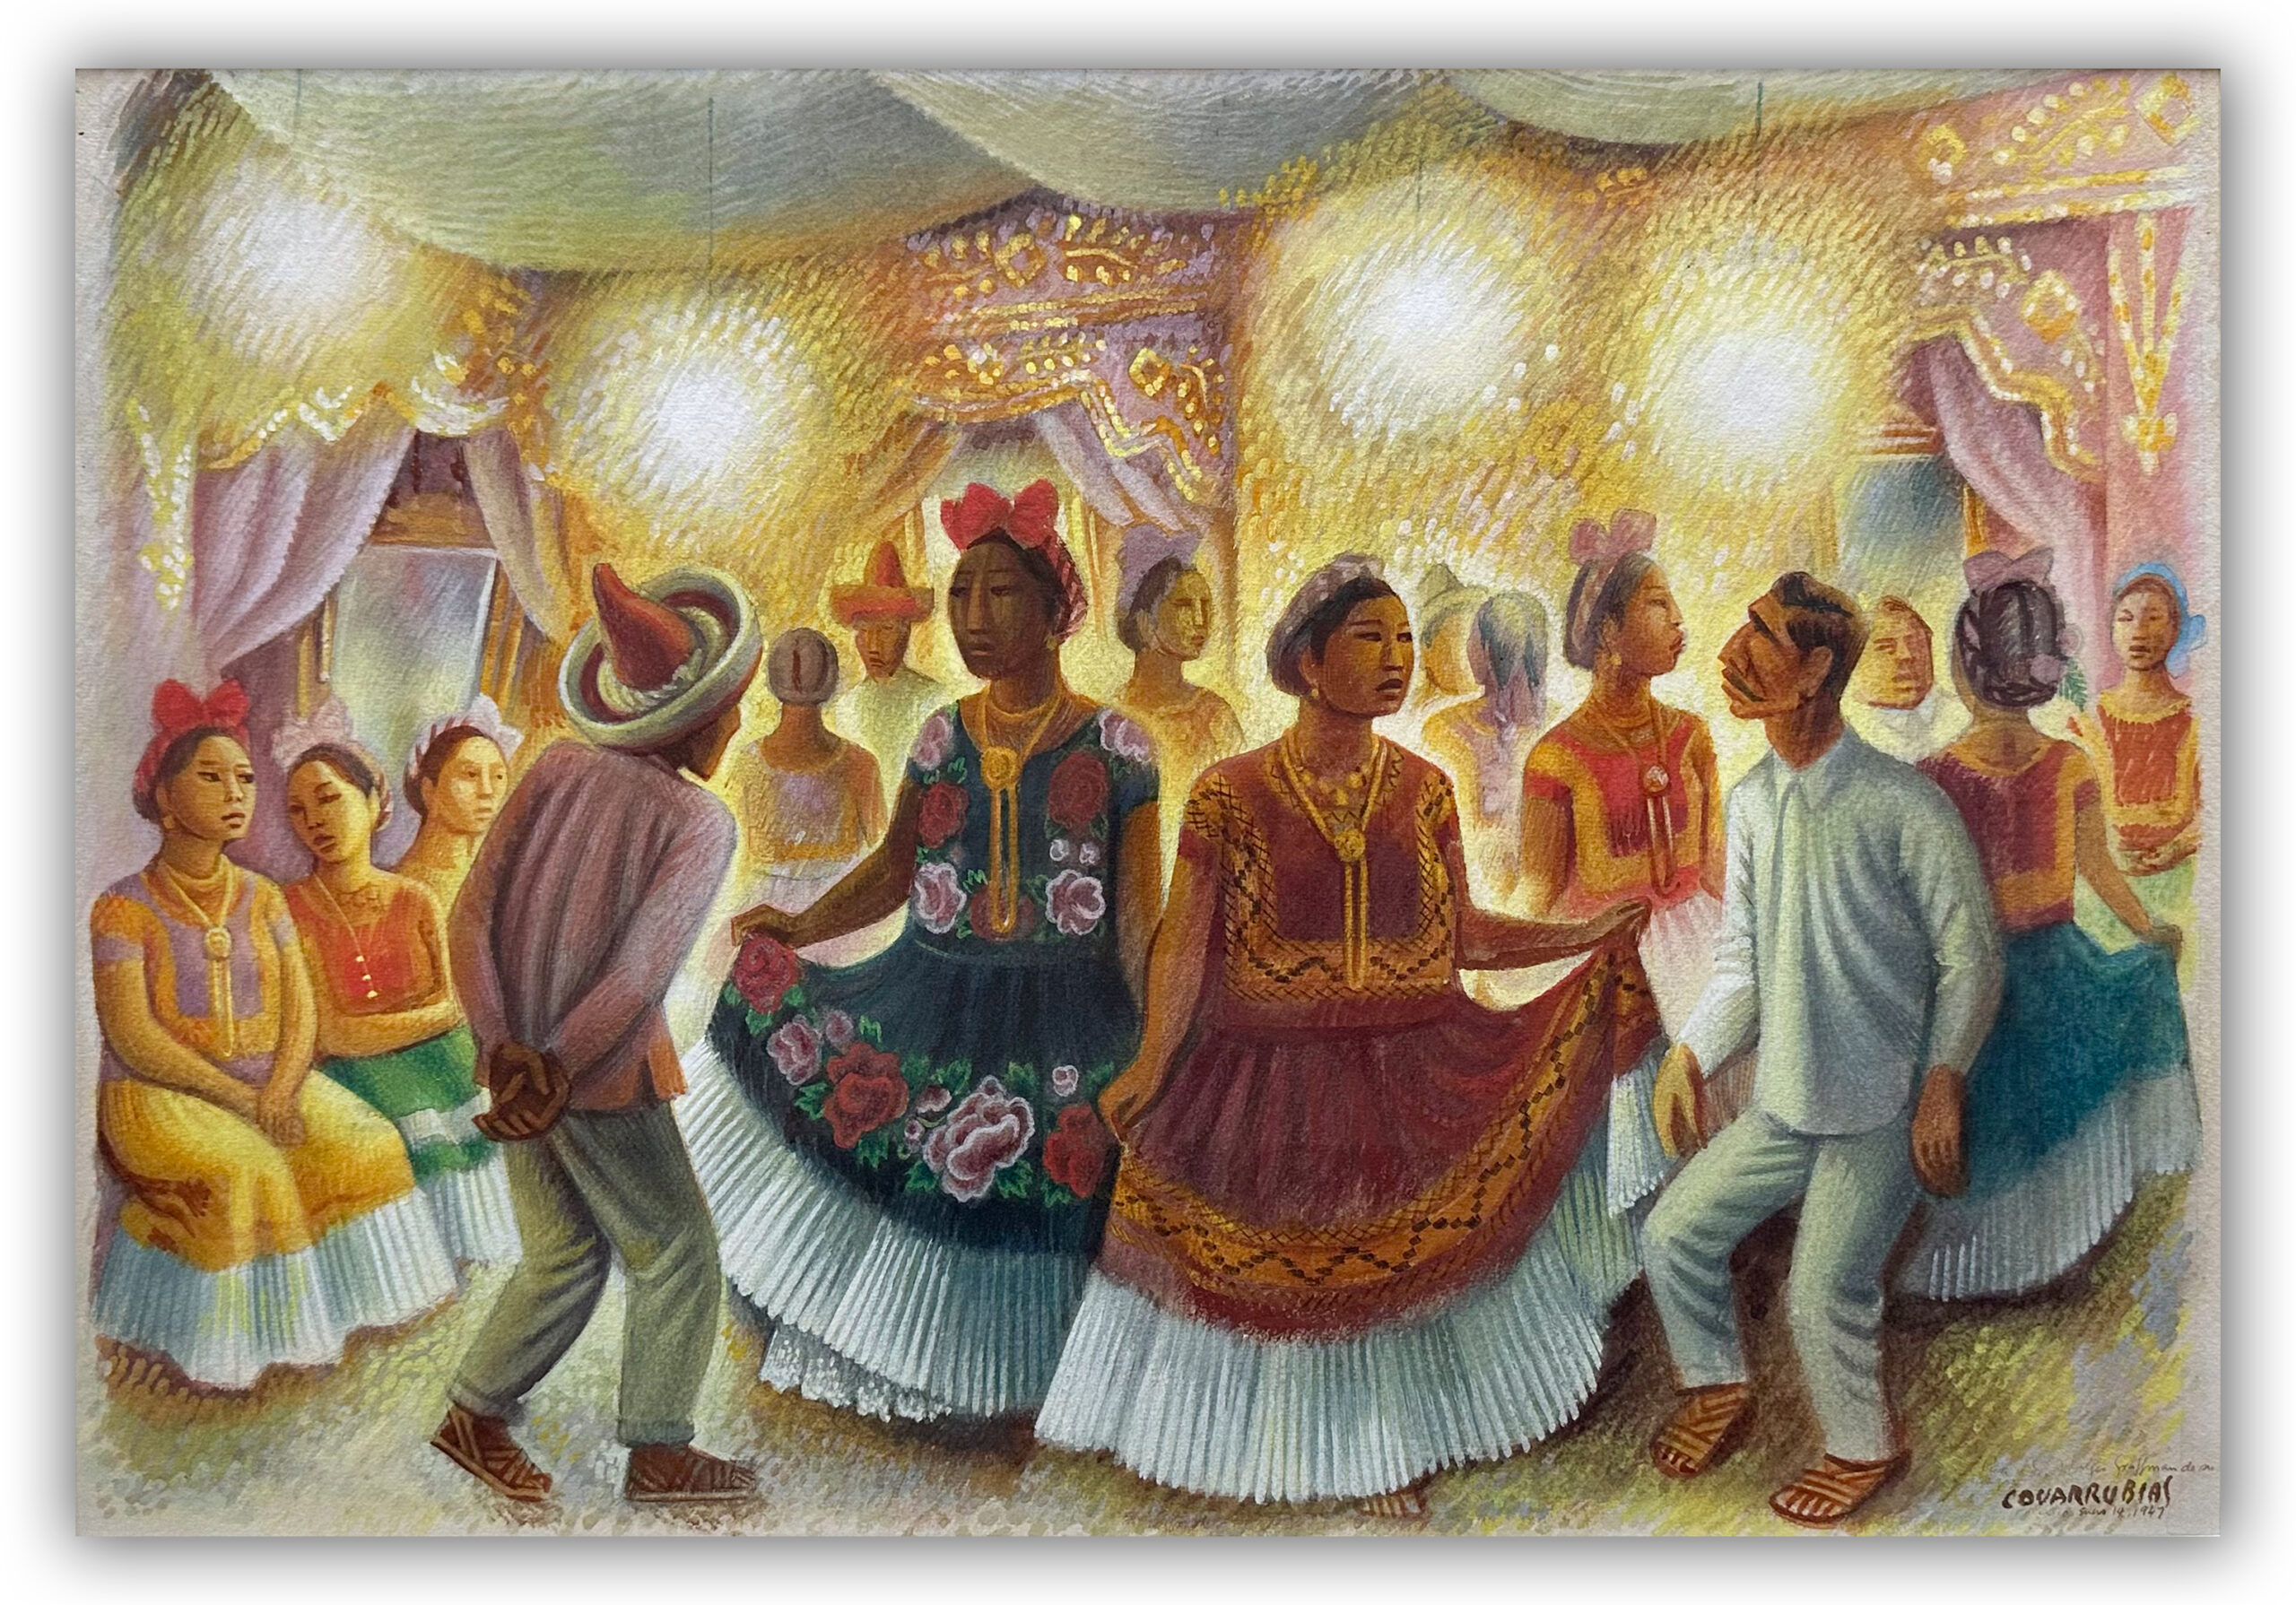 Covarrubias, ‘Juchitecos dancing the son’, 1942